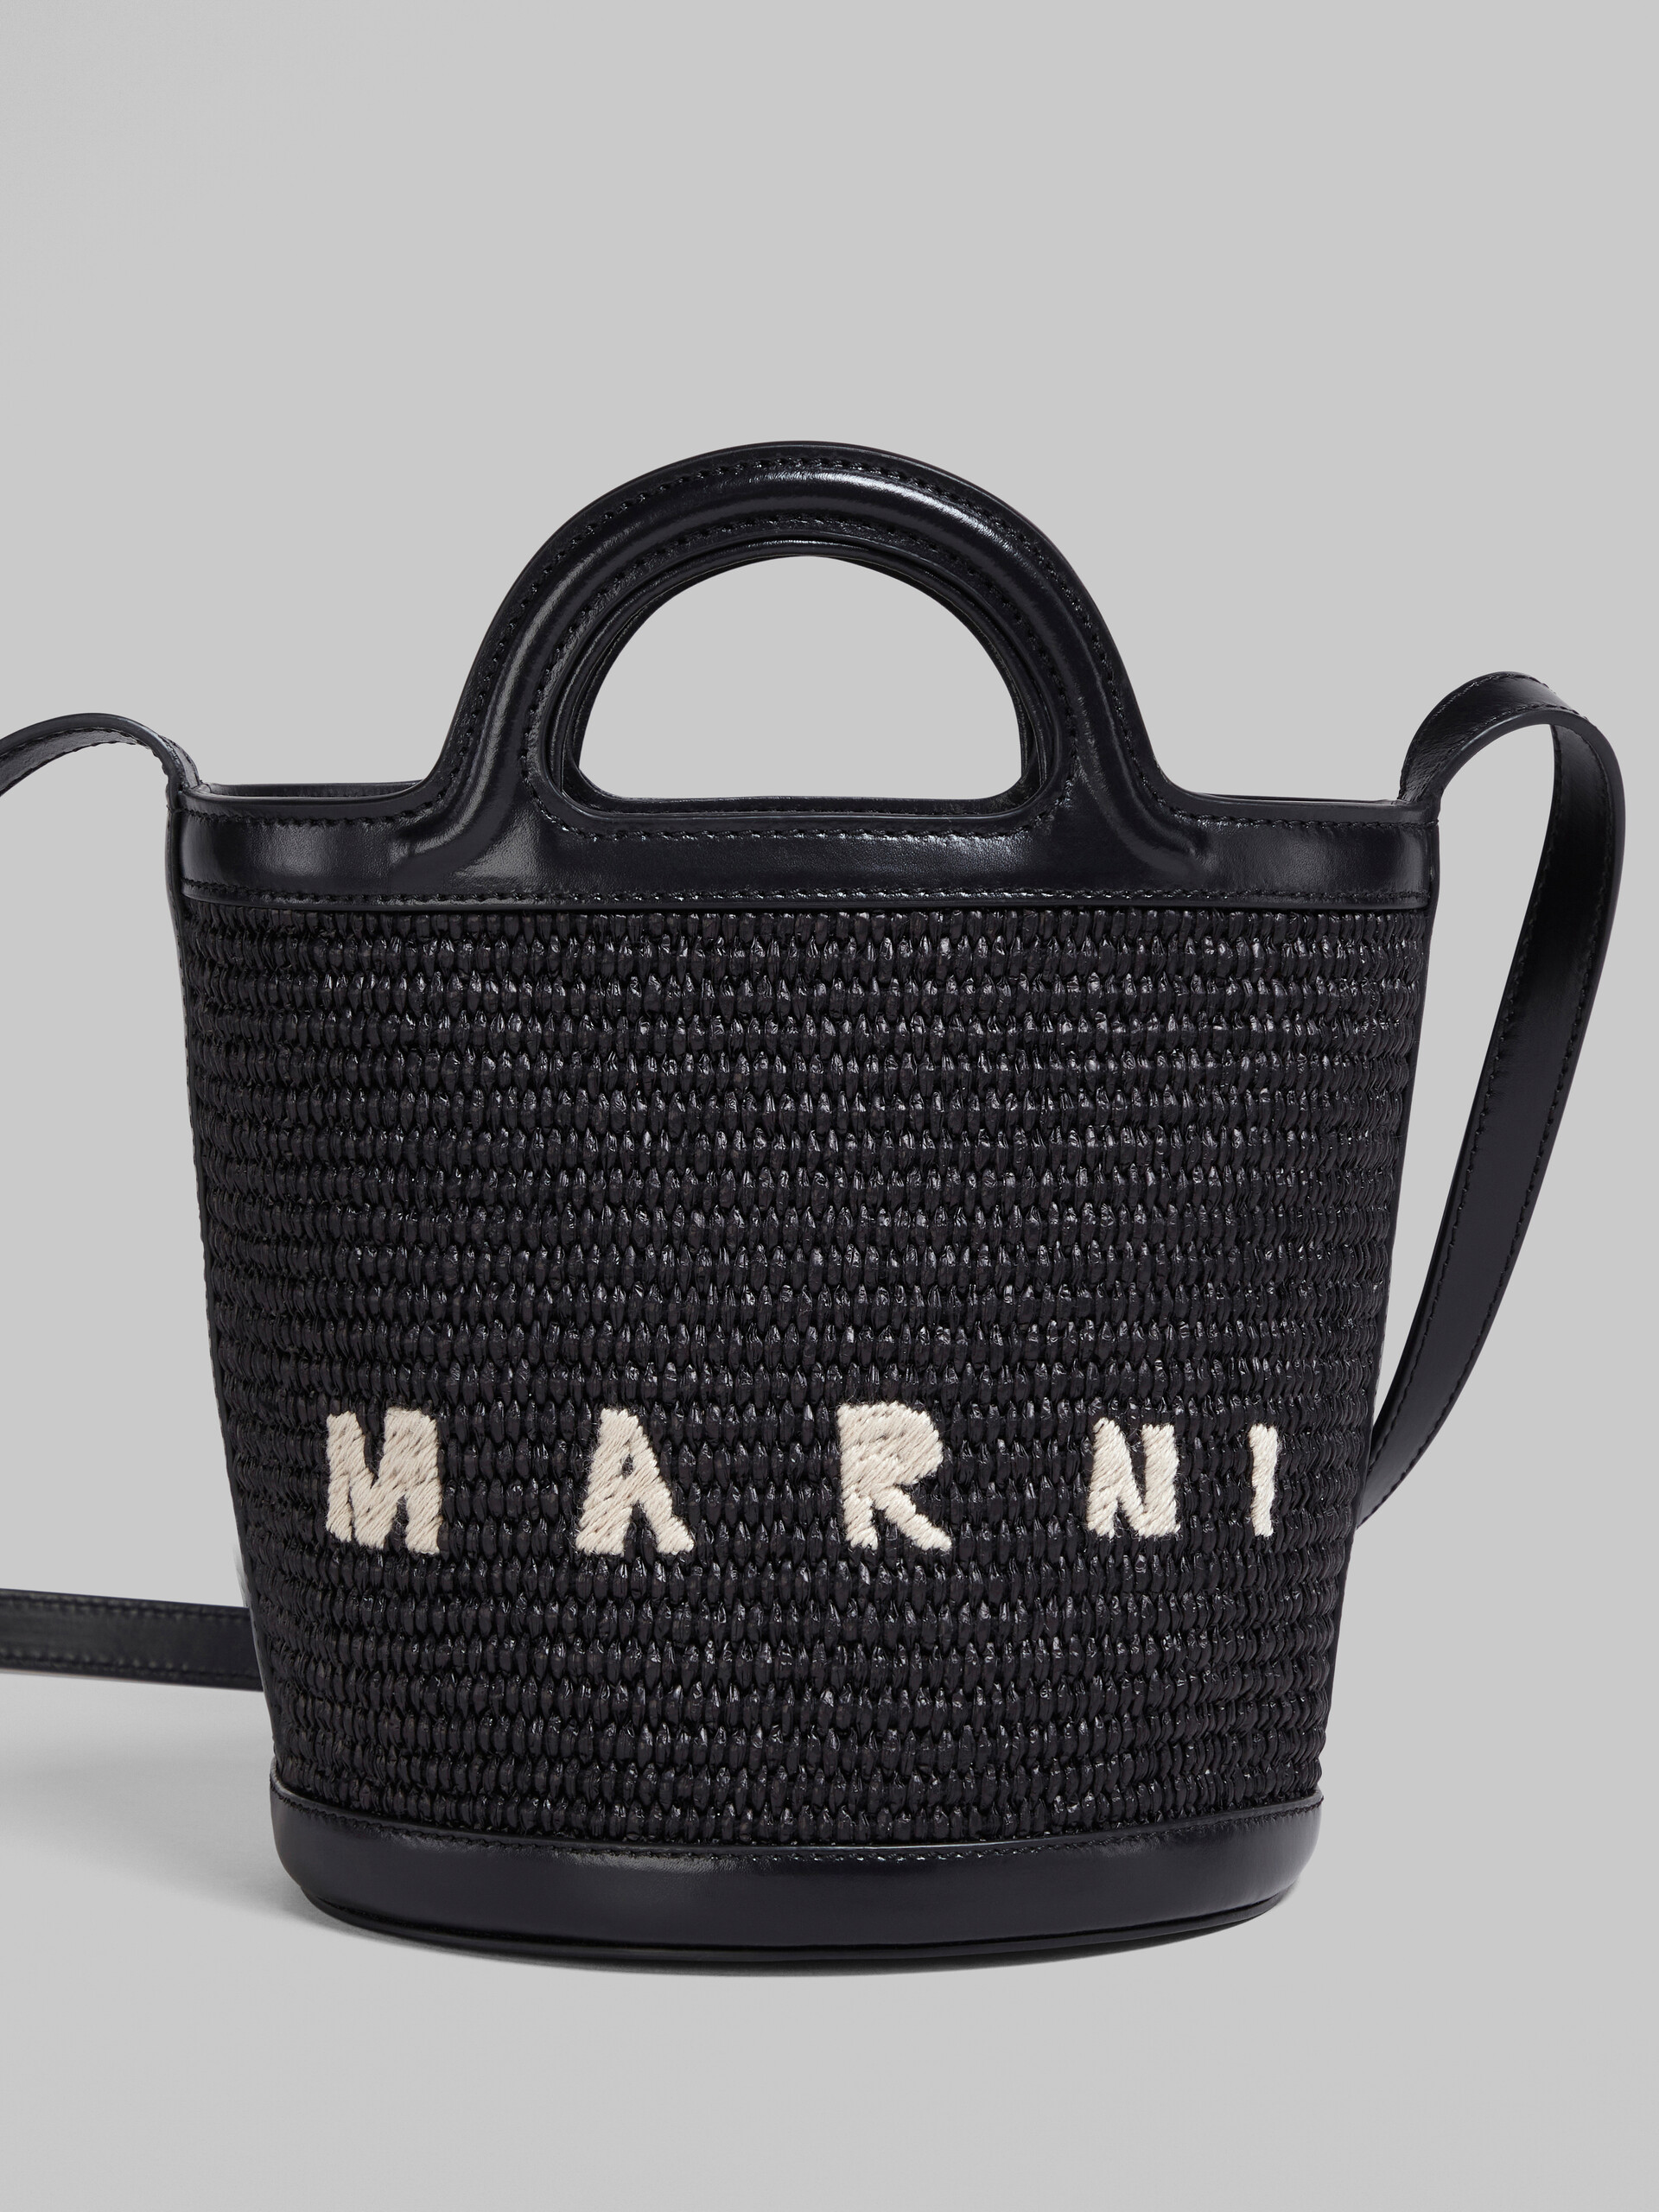 Tropicalia Small Bucket Bag in black leather and raffia - Shoulder Bag - Image 4